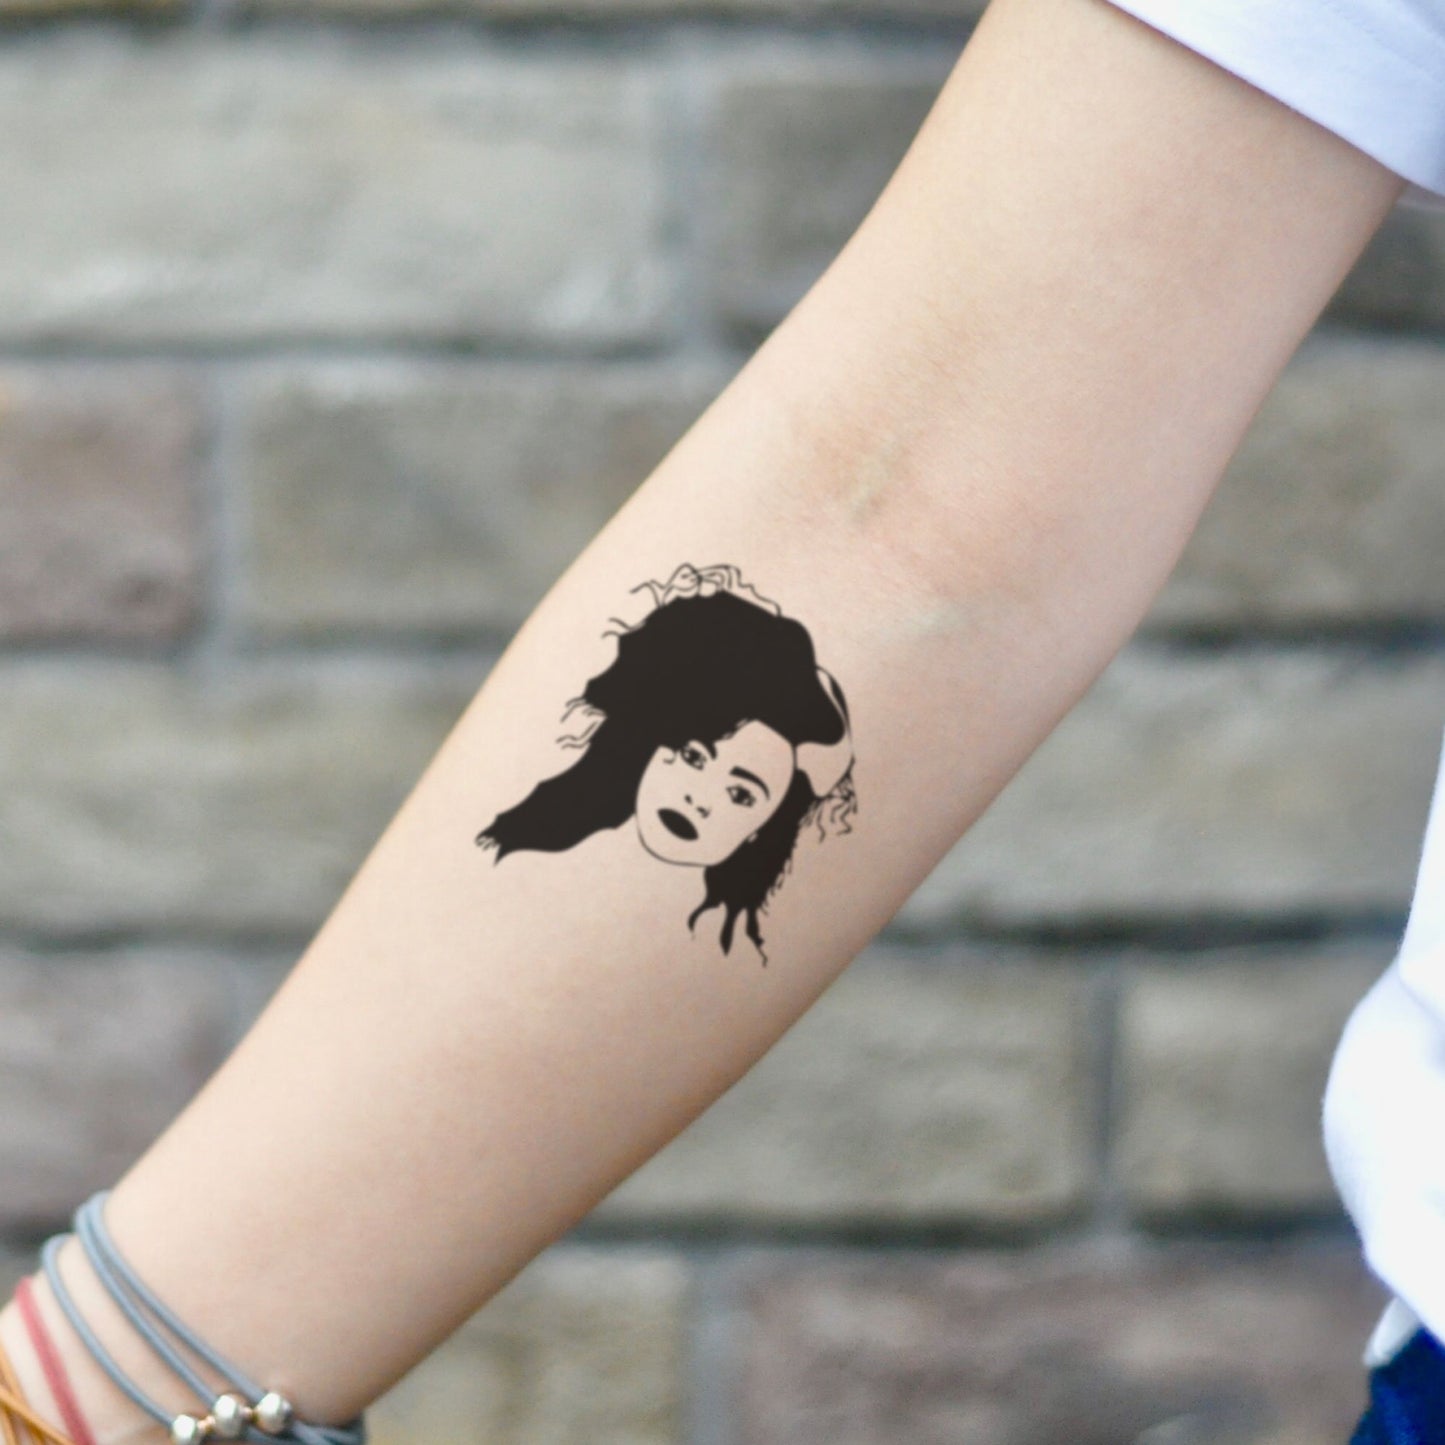 fake small bellatrix lestrange portrait temporary tattoo sticker design idea on inner arm